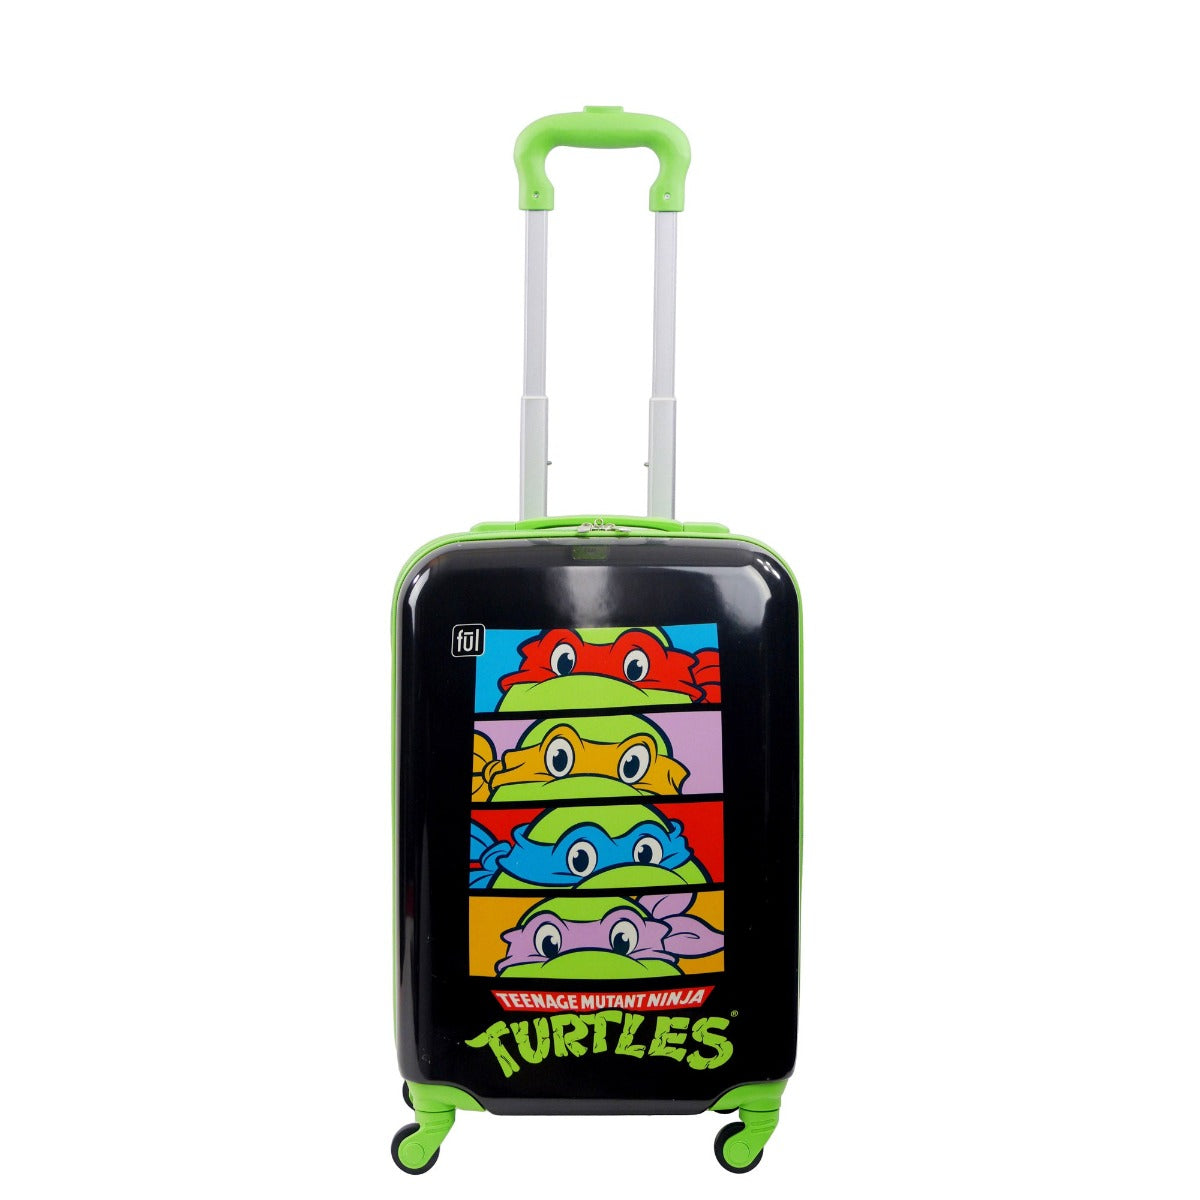 Teenage Mutant Ninja Turtles 21-inch carry-on spinner suitcase for kids